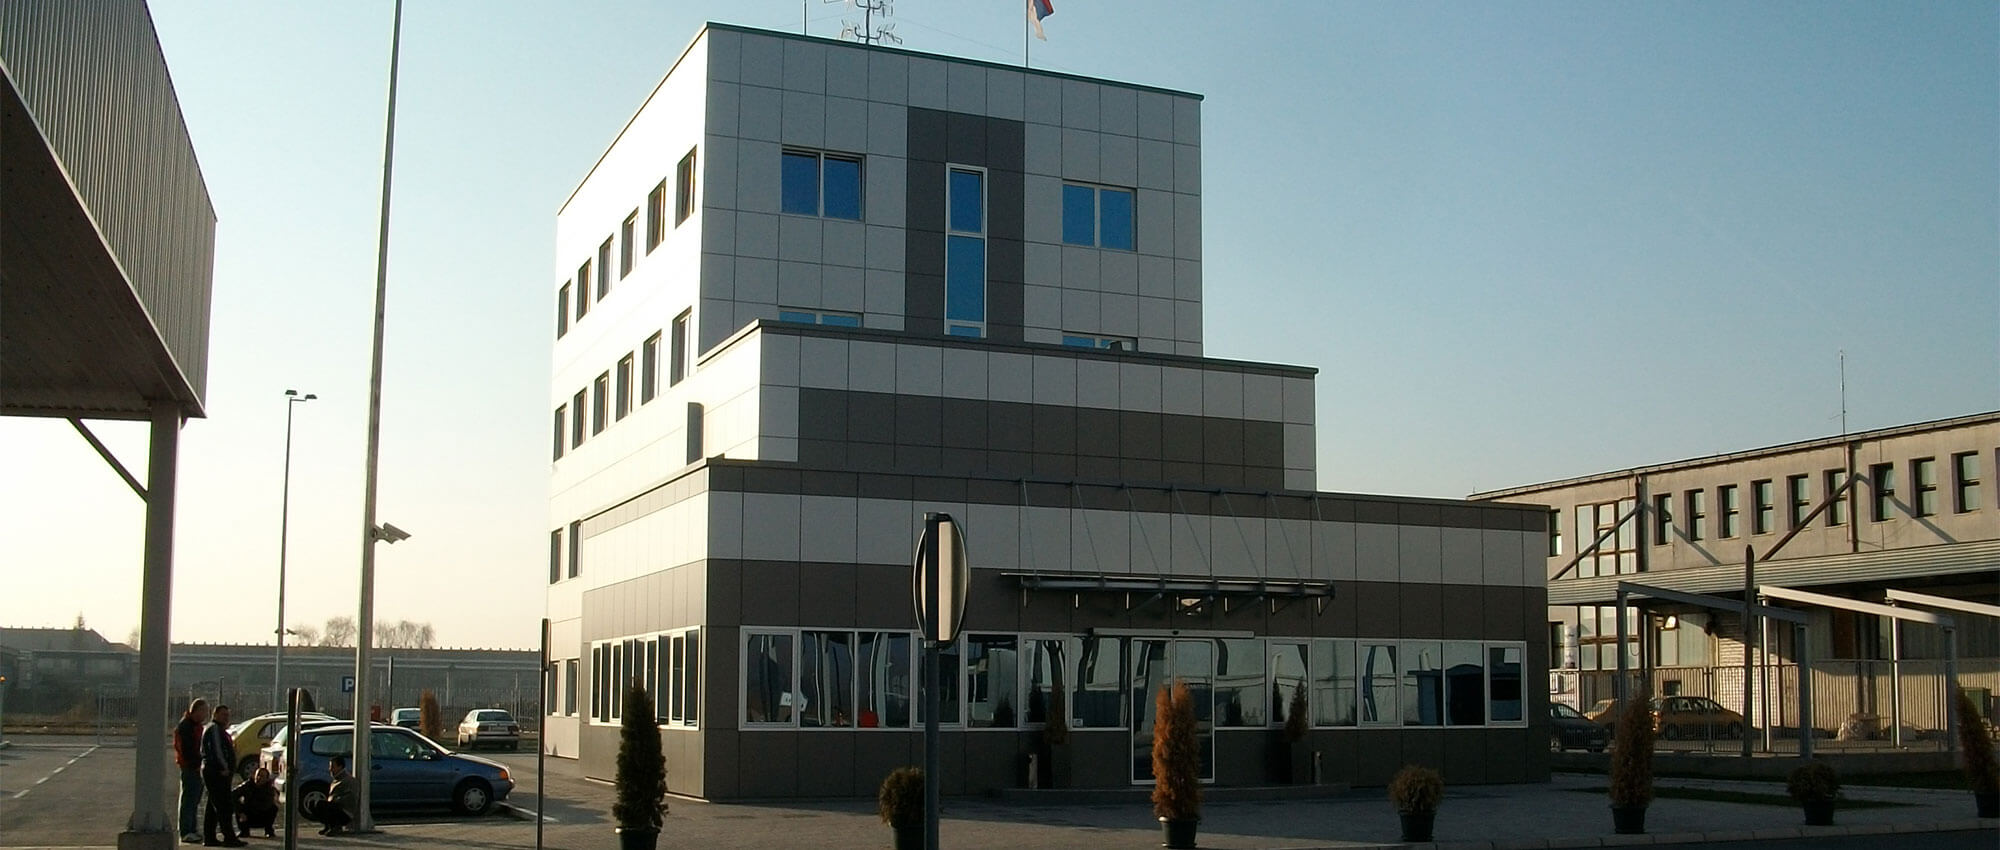 Robnocarinski terminal carinske ispostave, Kruševac